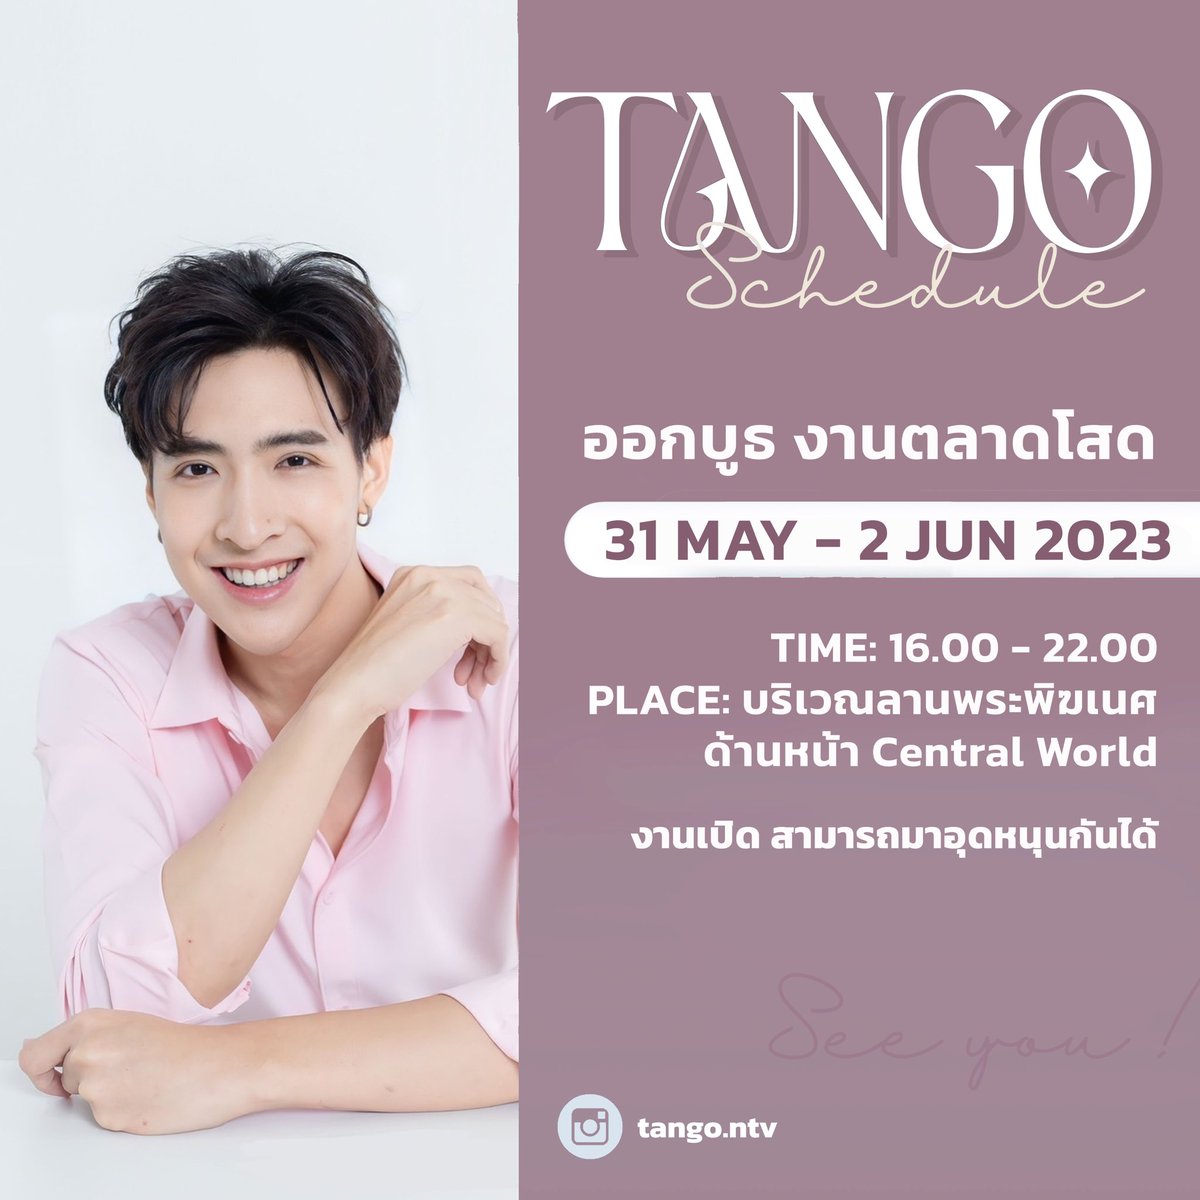 TANG-O Schedule🥬

ออกบูธ งานตลาดโสด

📅: 31 พฤษภาคม - 2 มิถุนายน 2567
🏫: บริเวณลานพระพิฆเนศ ด้านหน้า Central World
🕙: 16.00 - 22.00

#TangoNatthavat